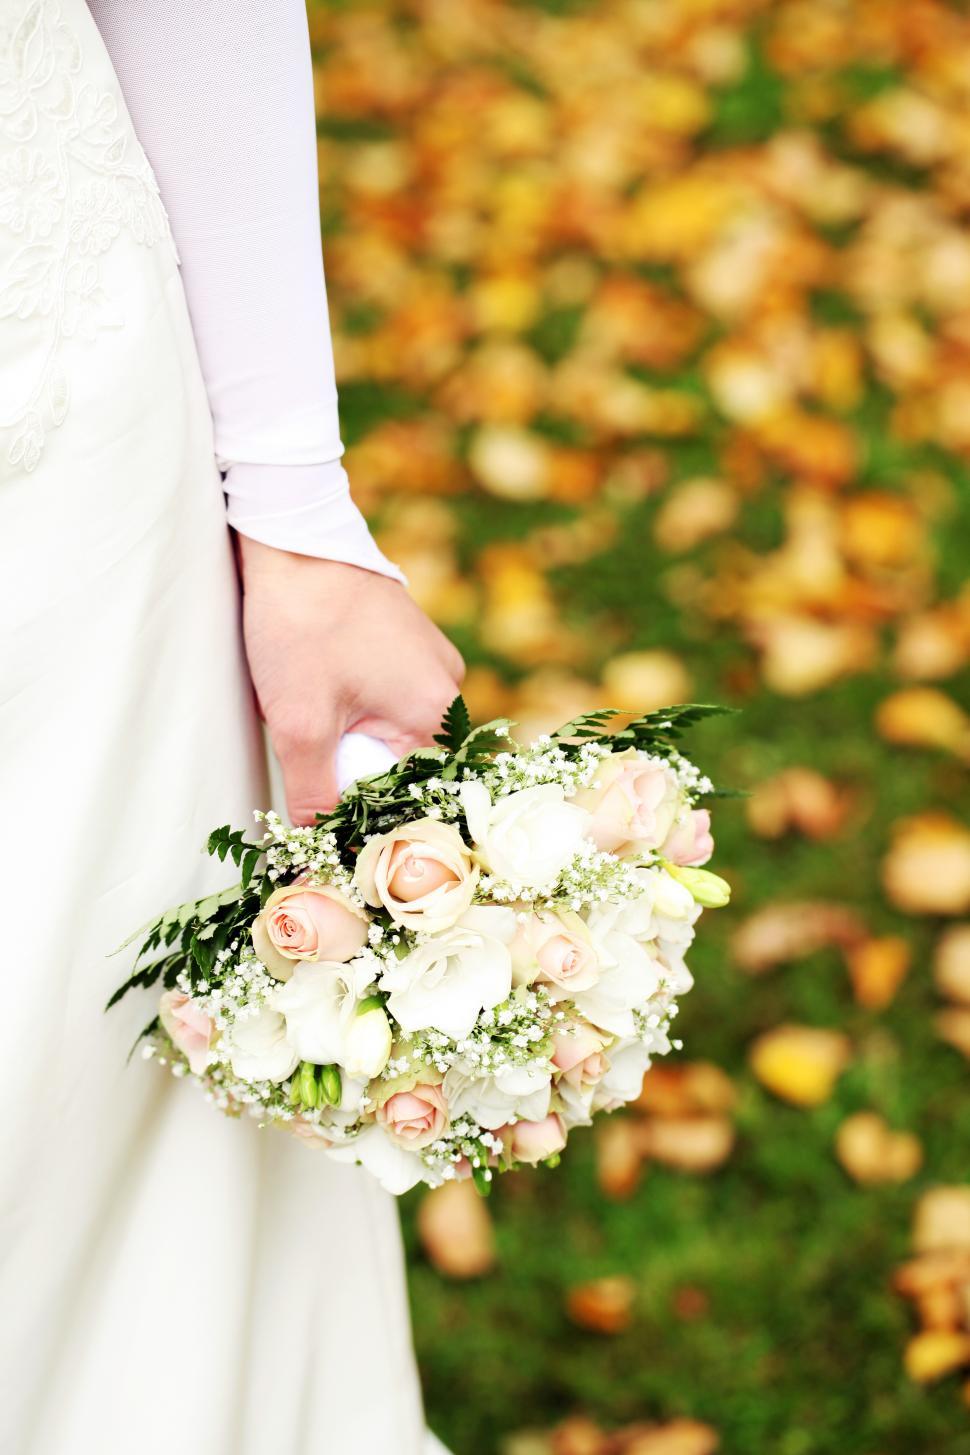 Free Image of Bridal Flowers 